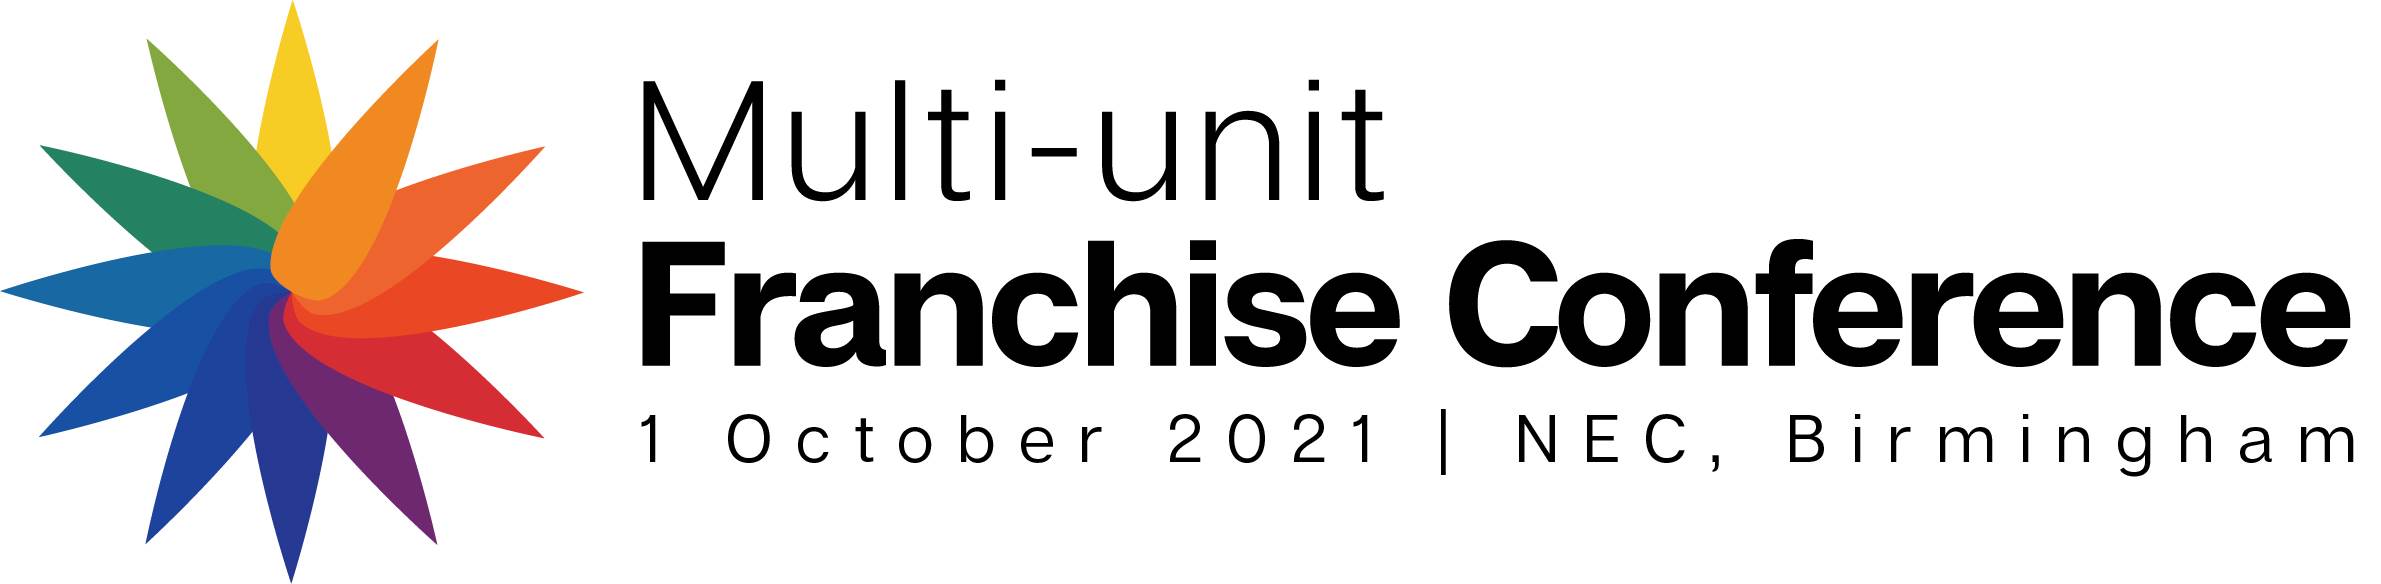 Multi-unit Franchise Conference 